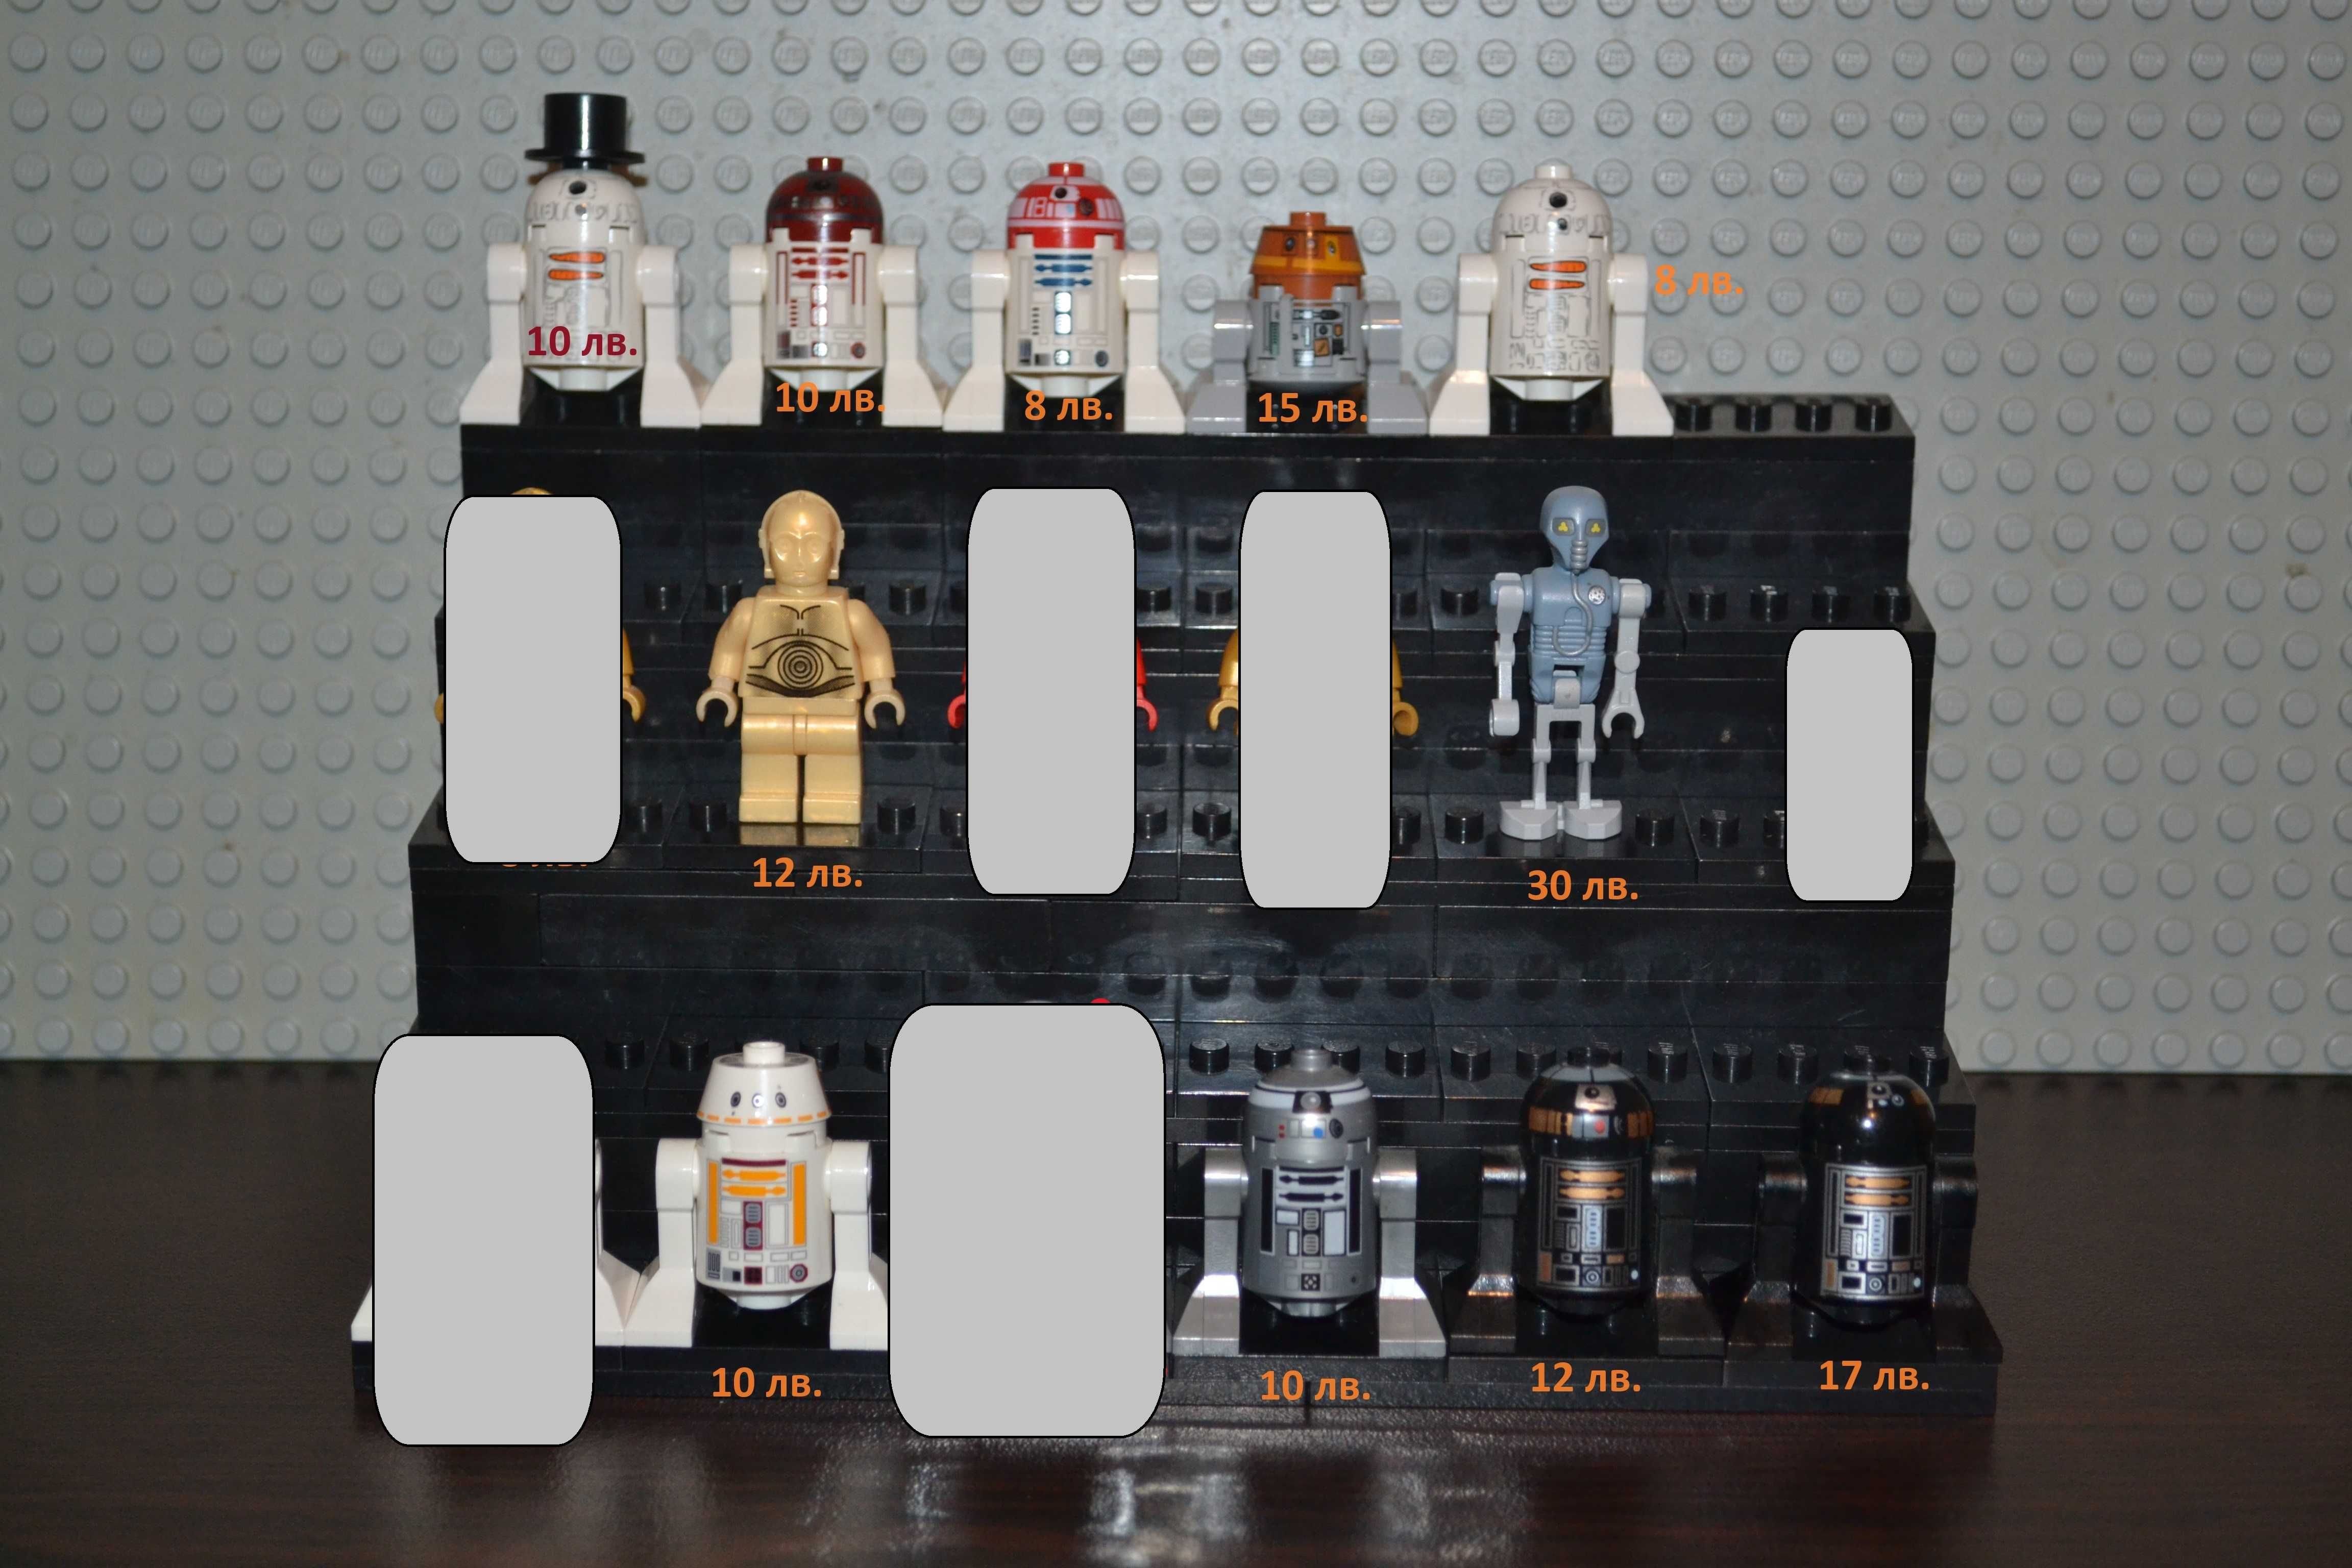 LEGO Star Wars минифигурки (4)